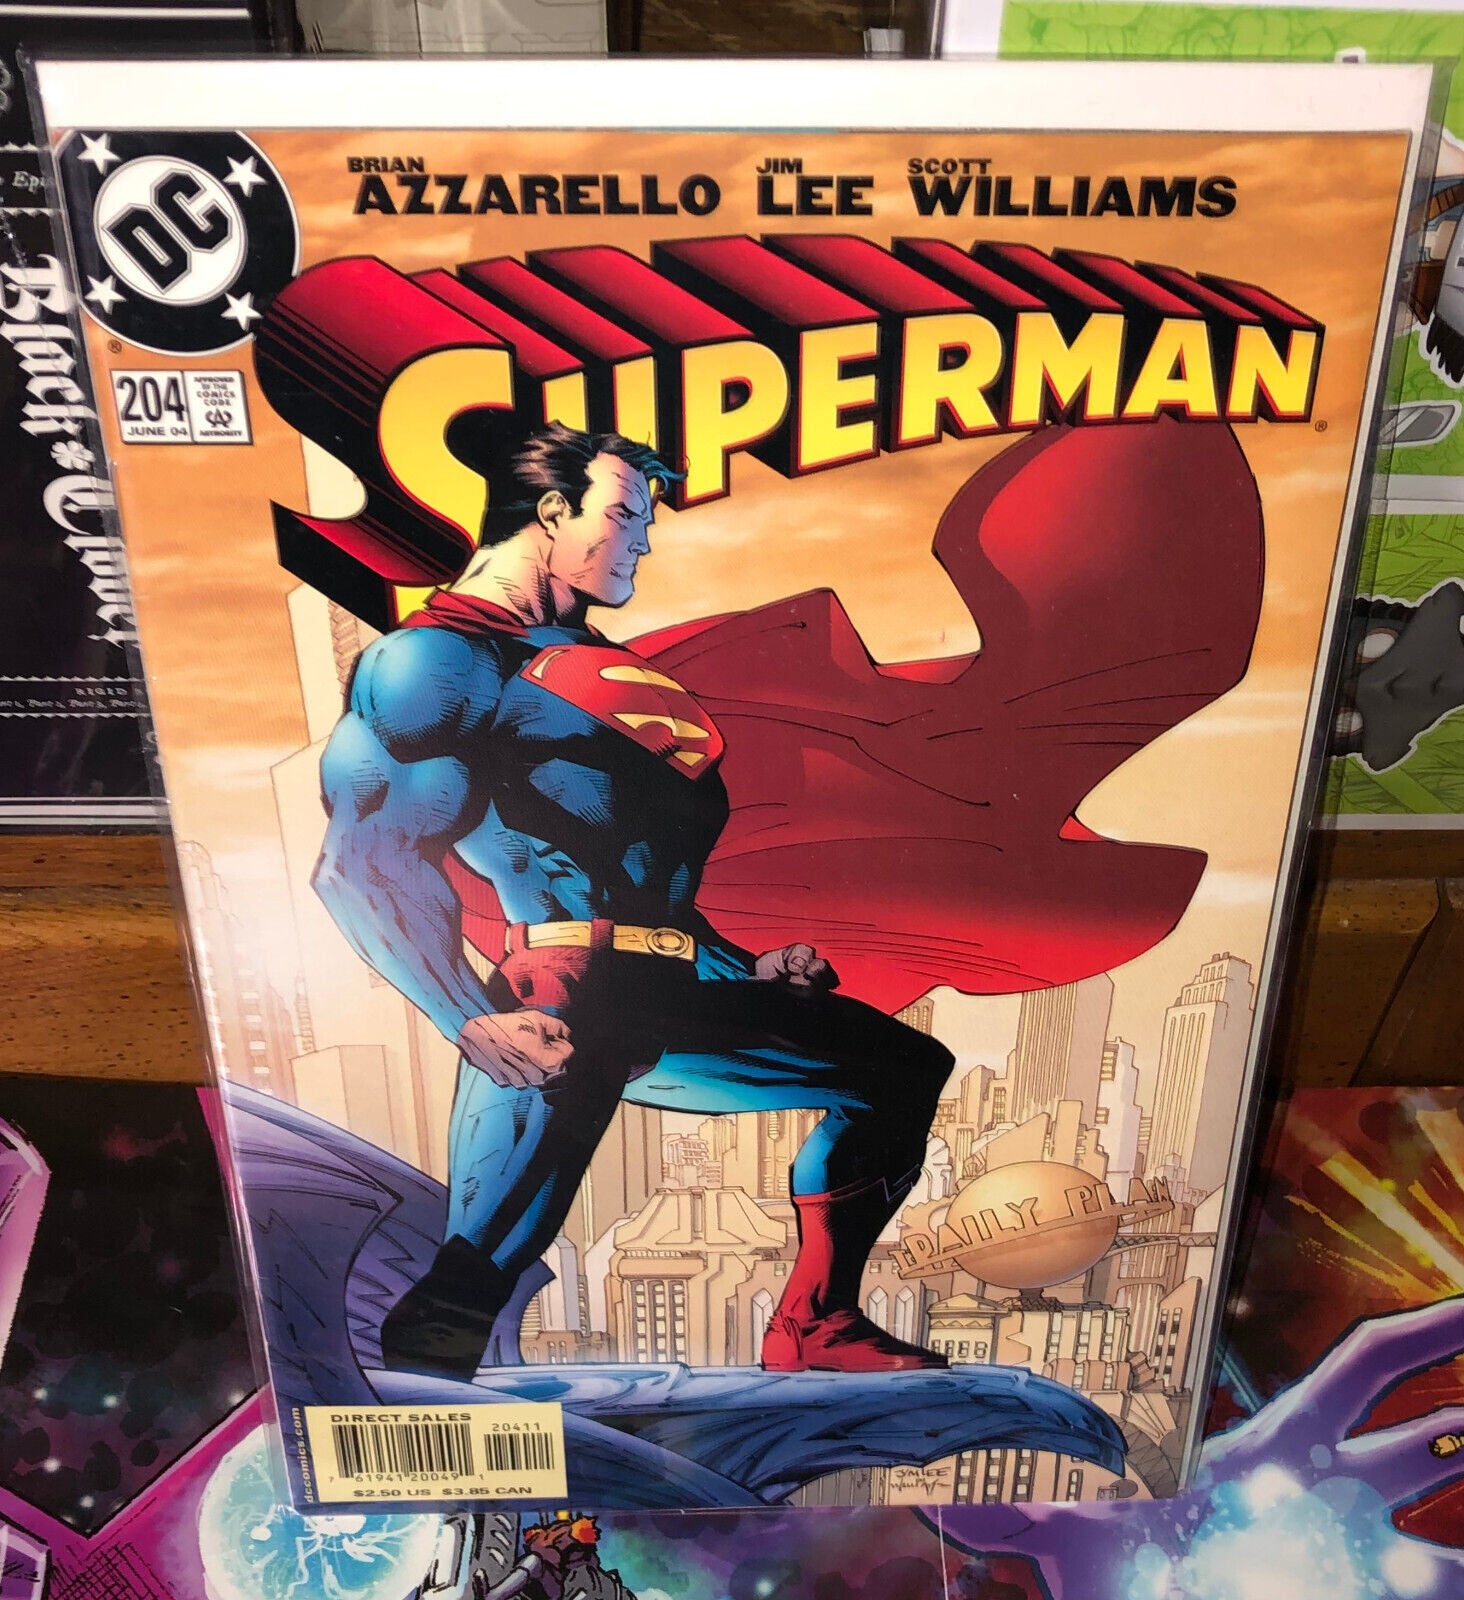 DC Comics - Superman 204 Jim Lee Scott Williams Brian Azzarello 2004